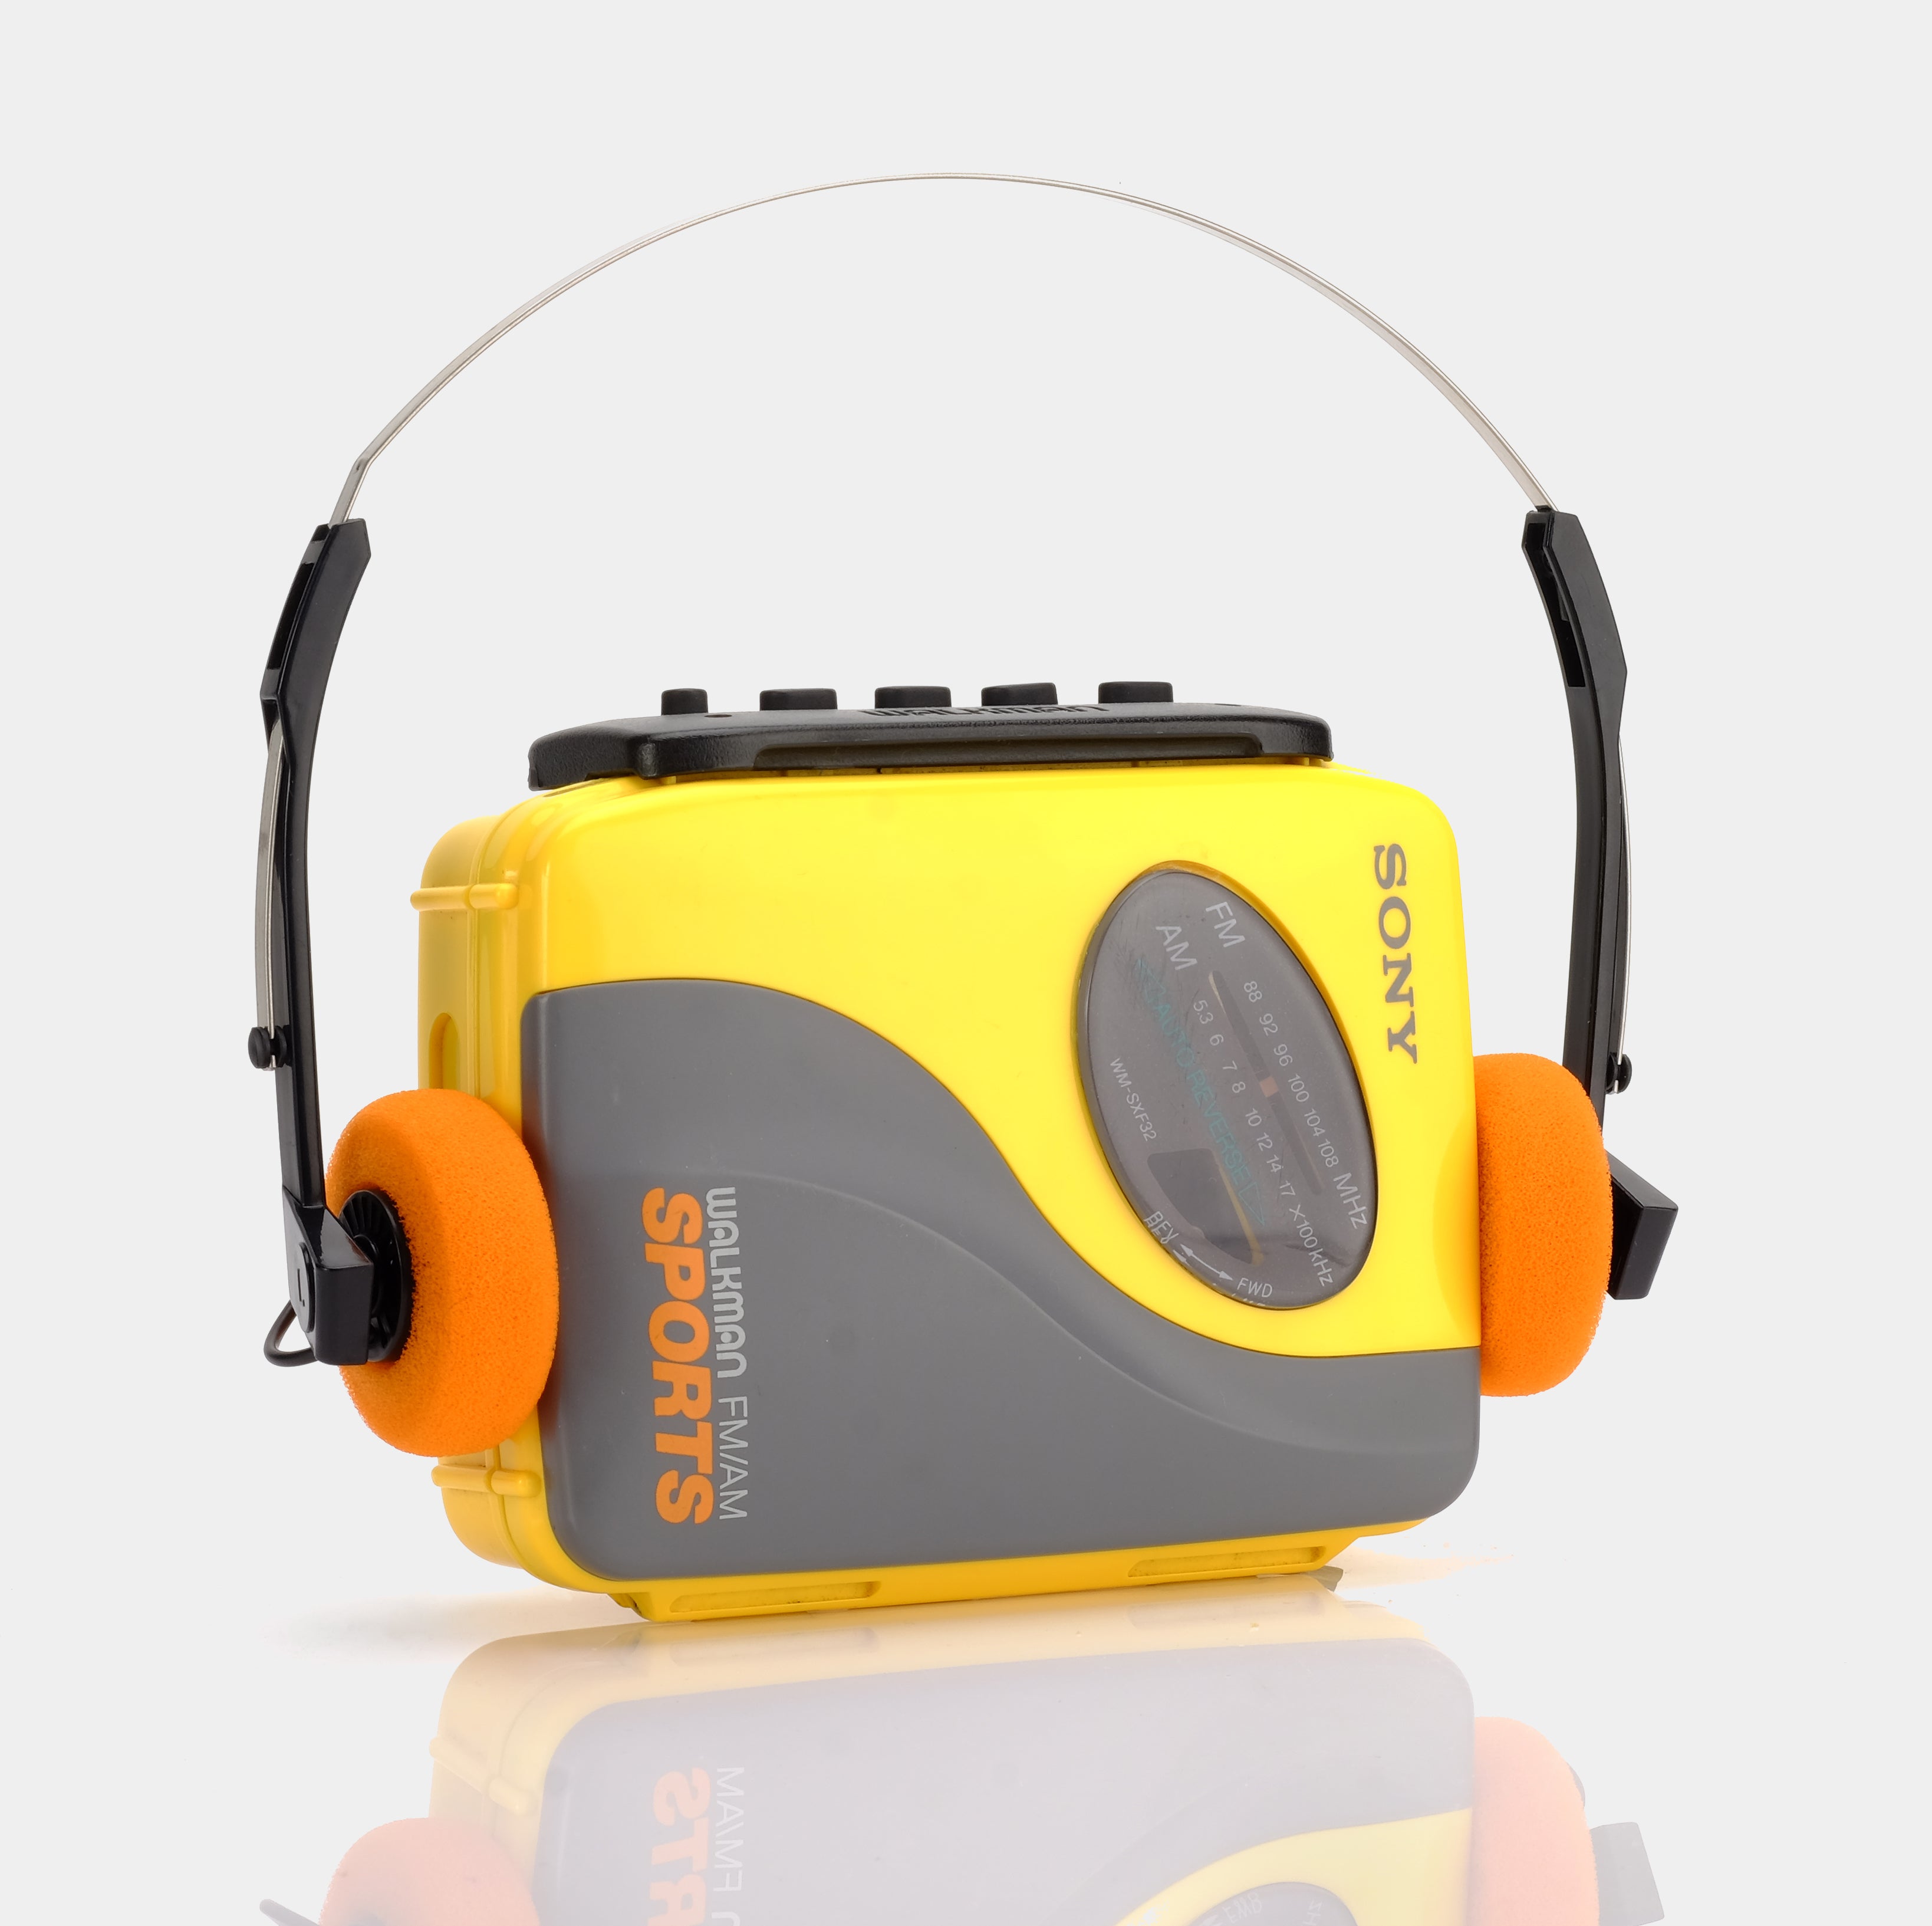 yellow walkman cassette player